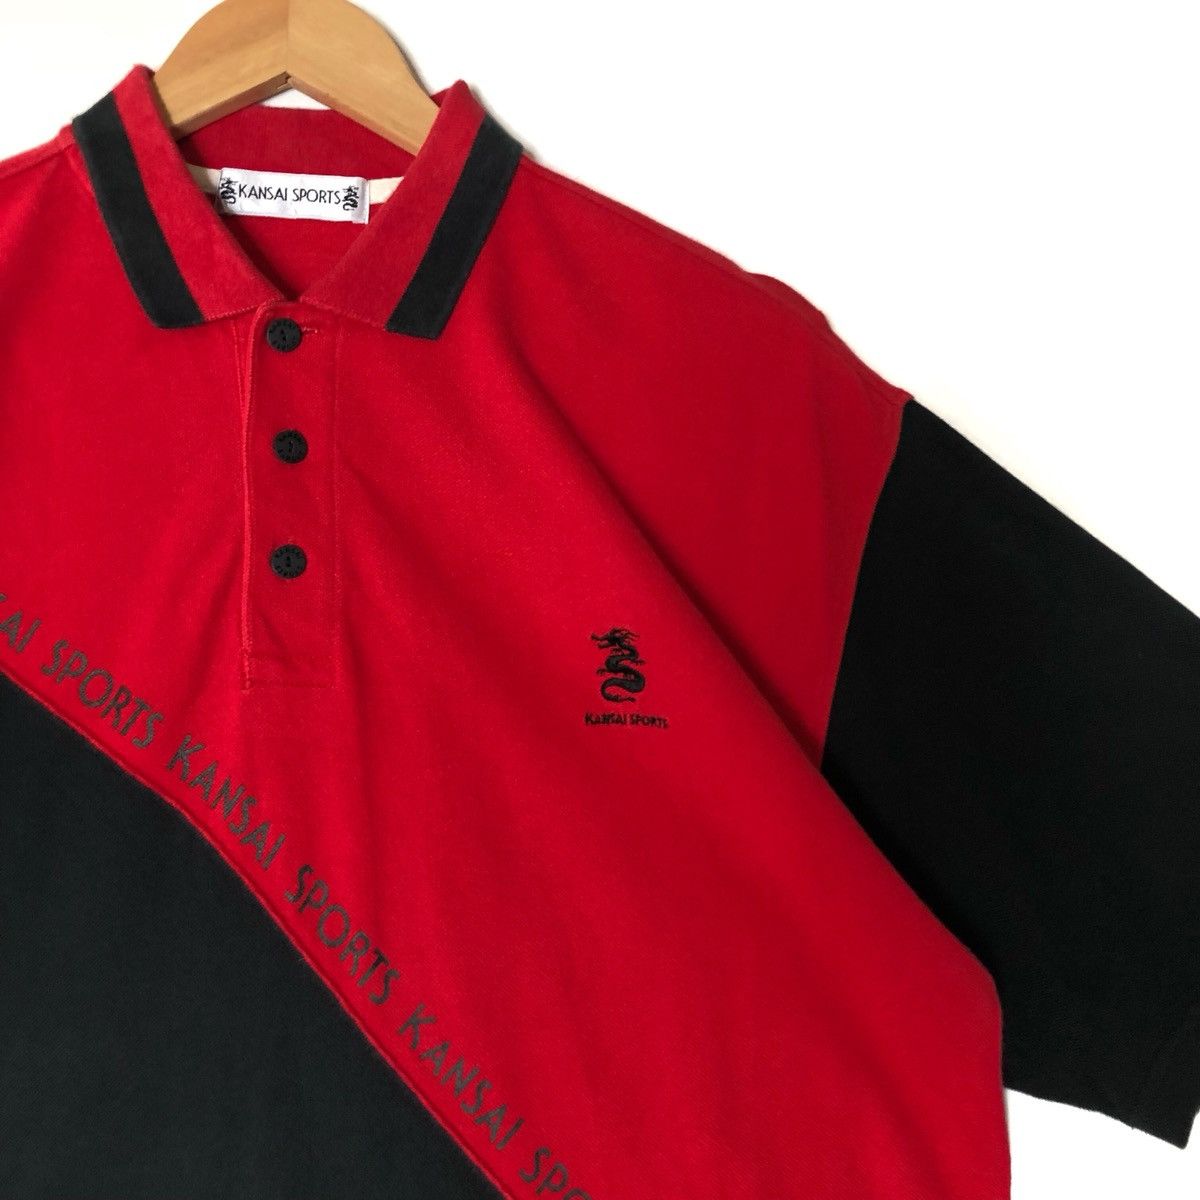 Japanese Brand Kansai Yamamoto Kansai Sports Polo Shirt Size US M / EU 48-50 / 2 - 2 Preview